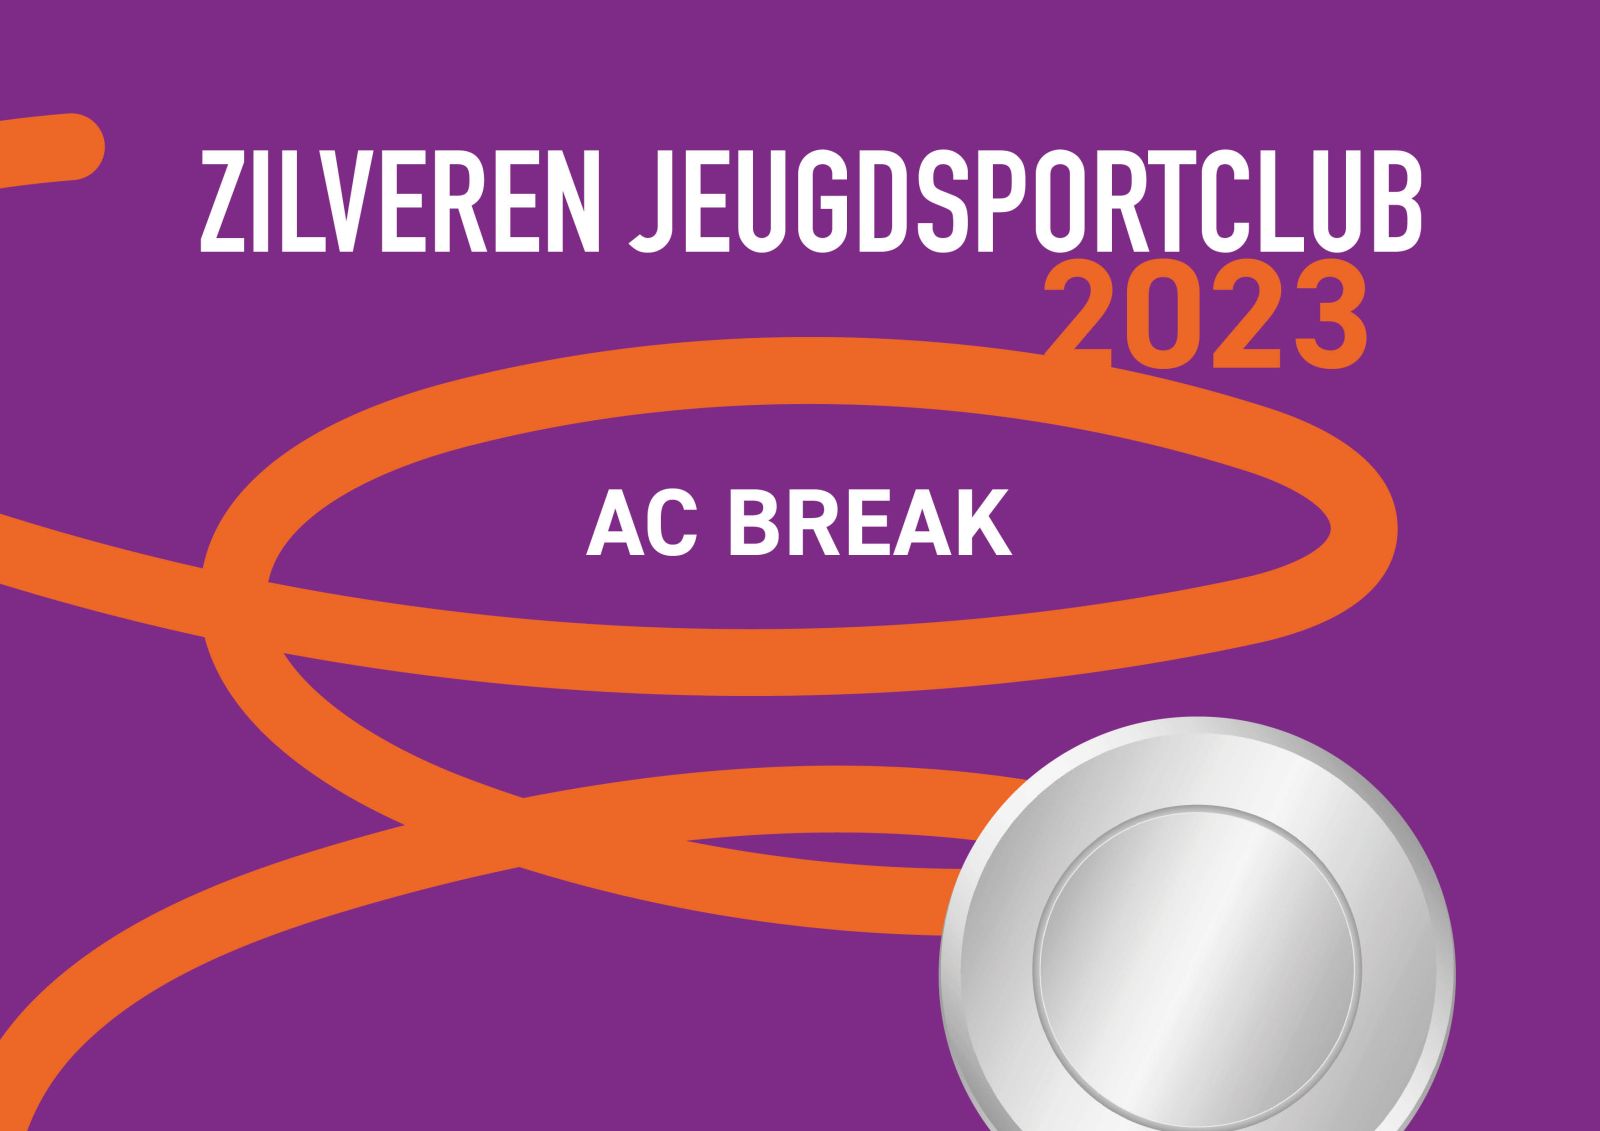 AC BREAK zilveren jeugdsportclub 2023